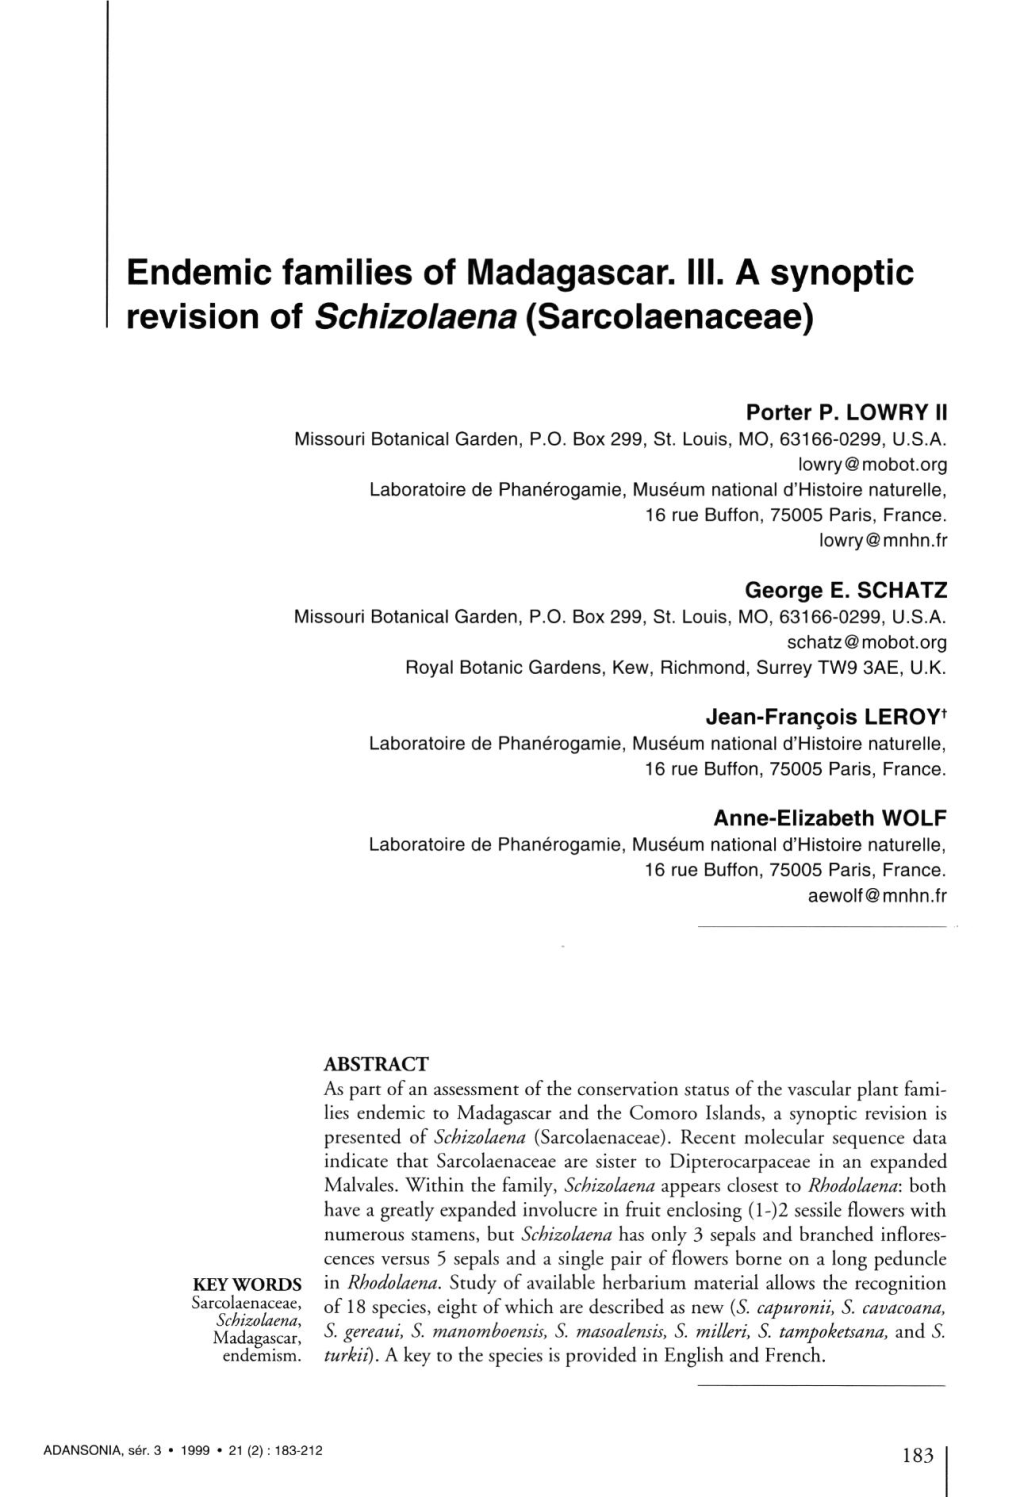 Endemic Families of Madagascar. III. a Synoptic Revision of Schizolaena (Sarcolaenaceae)